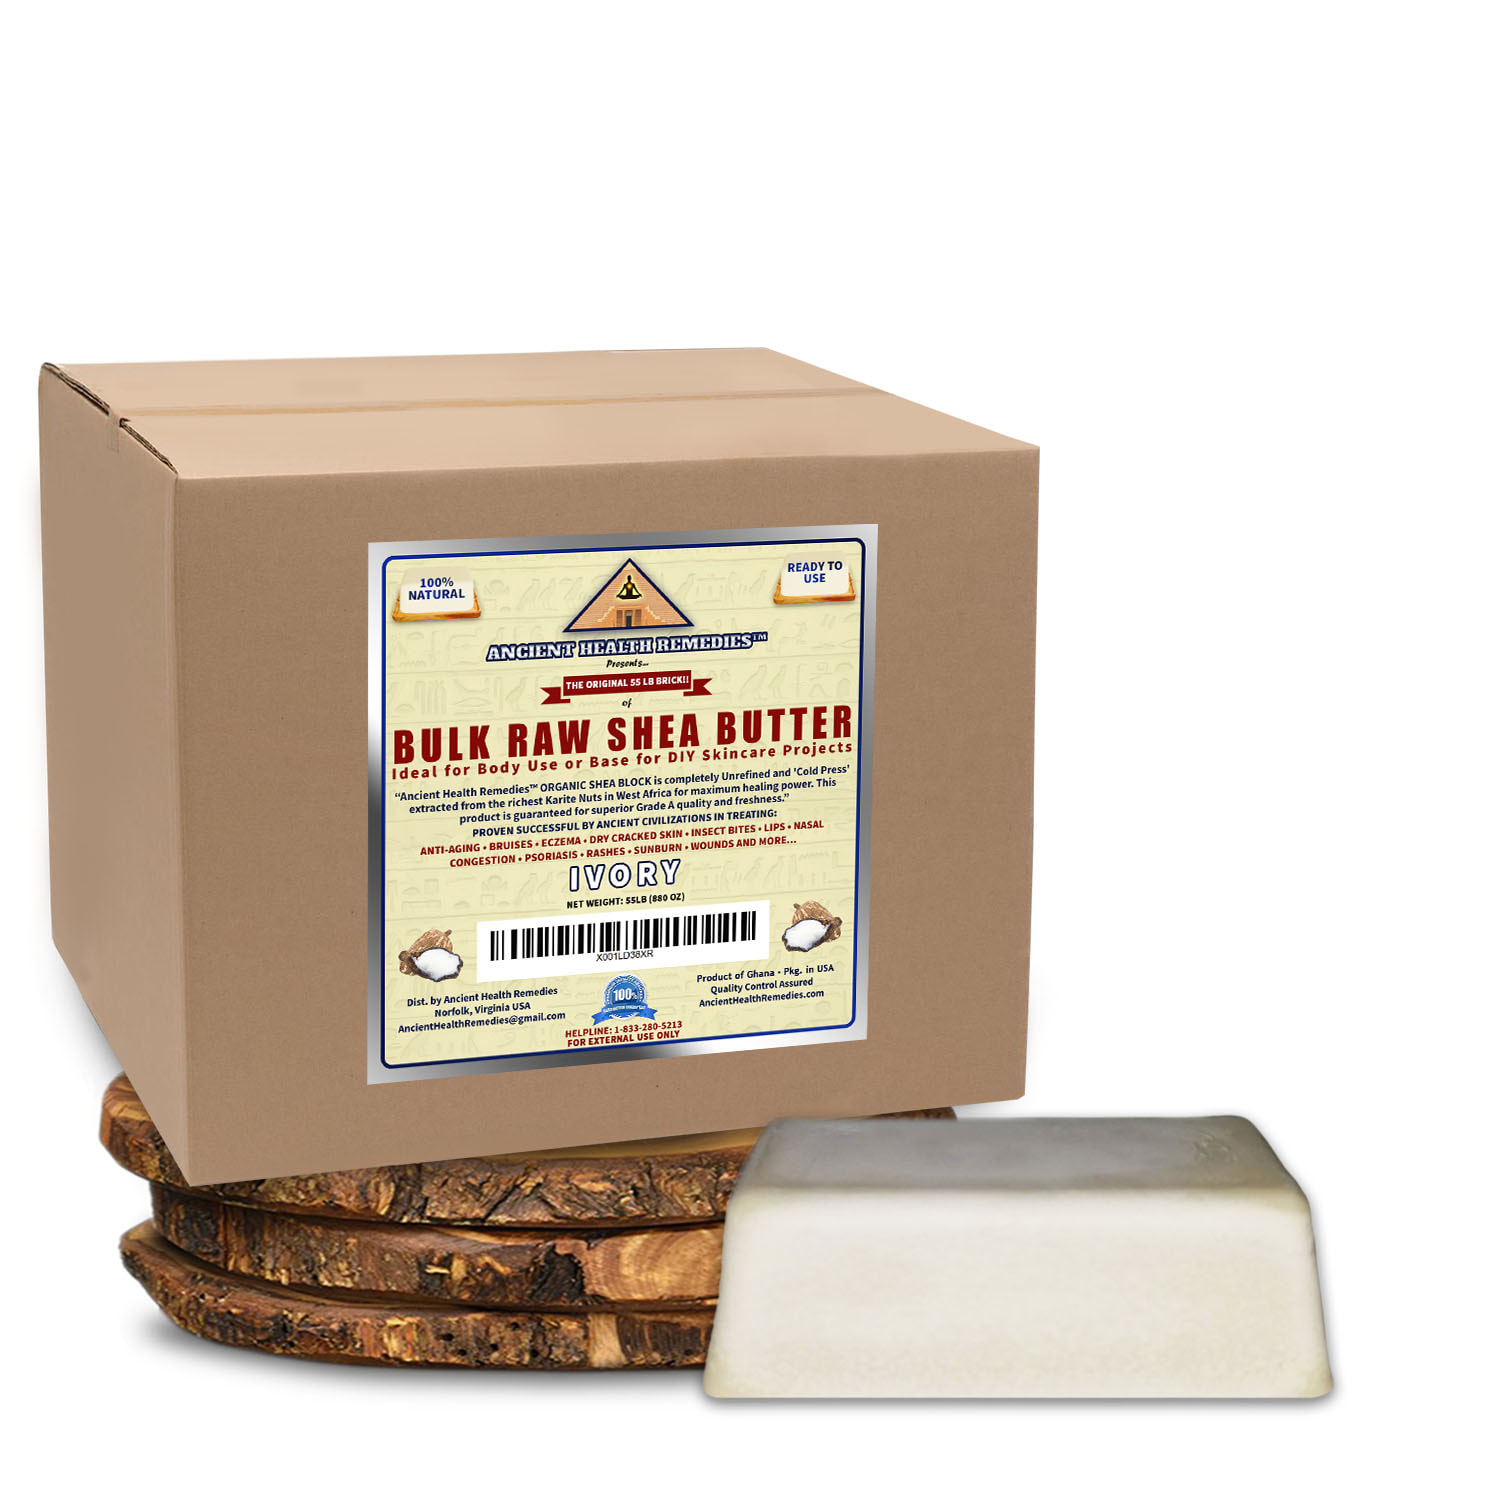 AHR Ivory Shea Butter Bulk Wholesale